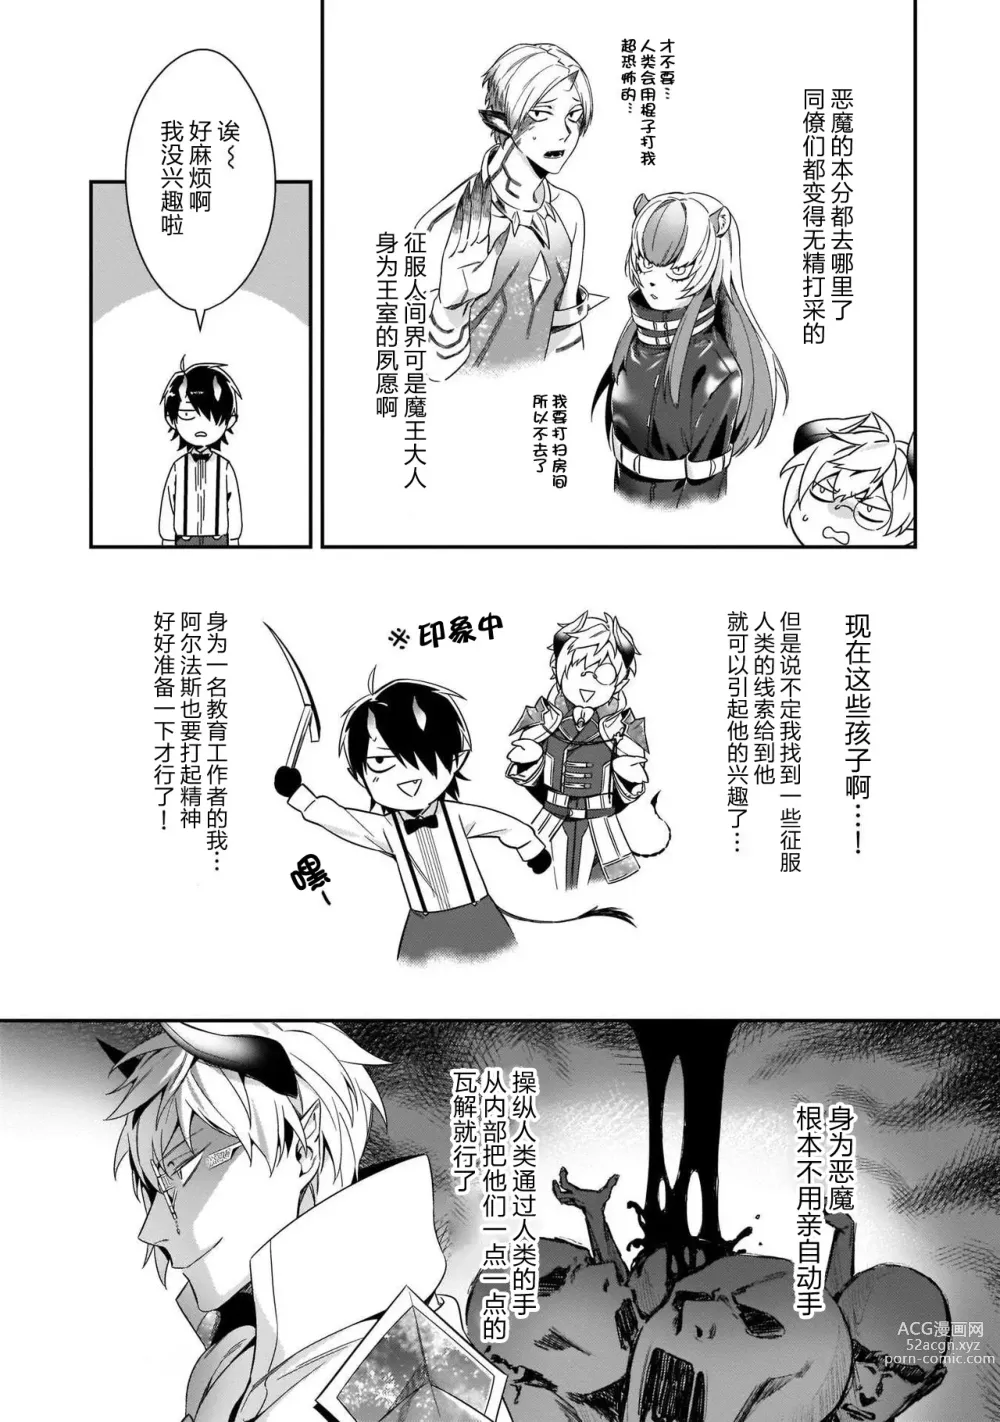 Page 5 of manga Torokeru kaikan sokuochi akuma 1-3